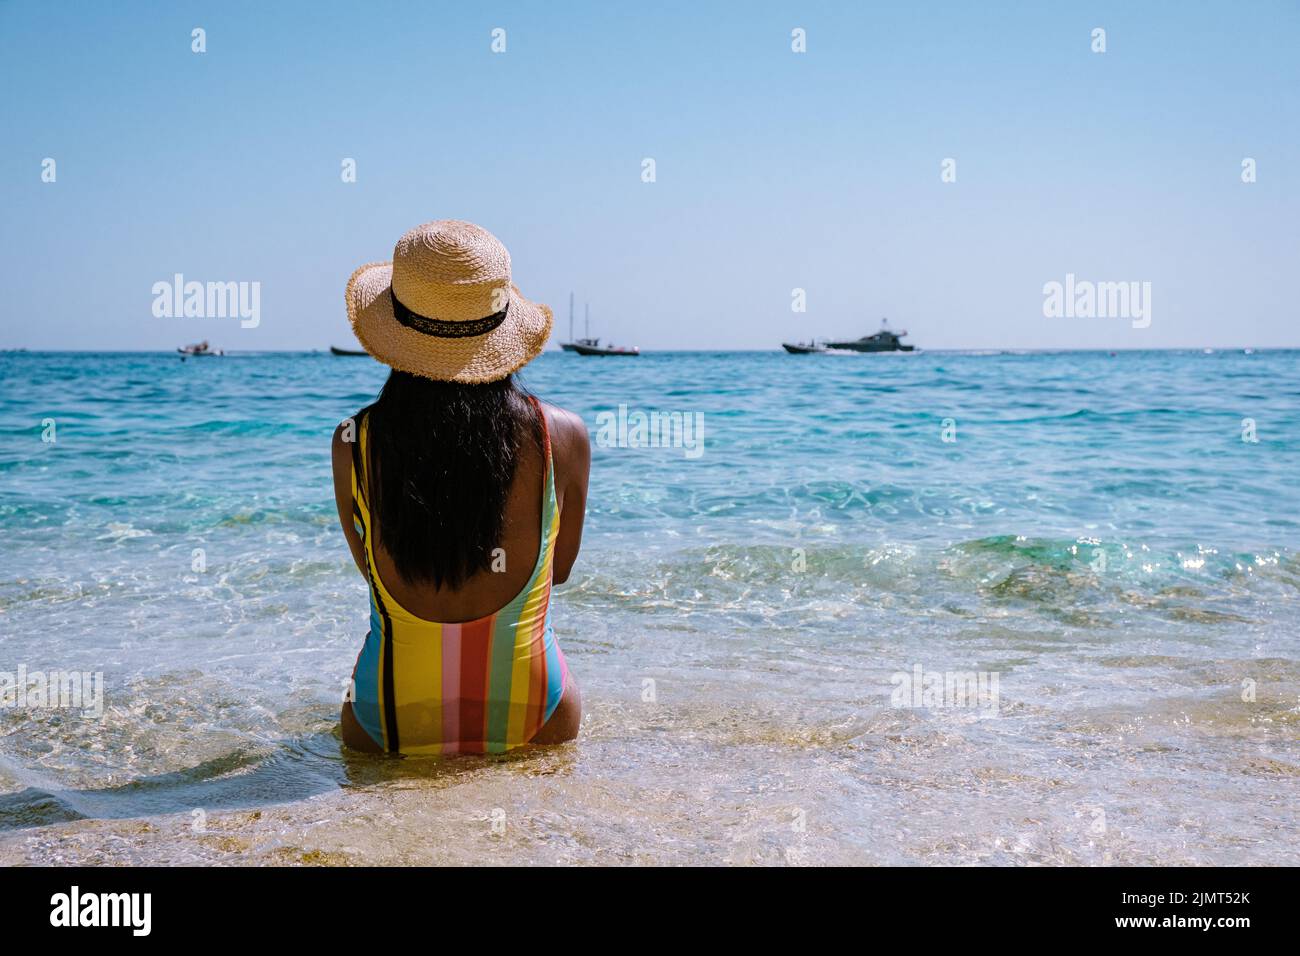 Golfo di Orosei Sardina, Asian women on the beach Sardinia Italy, young girl on vacation Sardinia Italy, woman playing in the oc Stock Photo